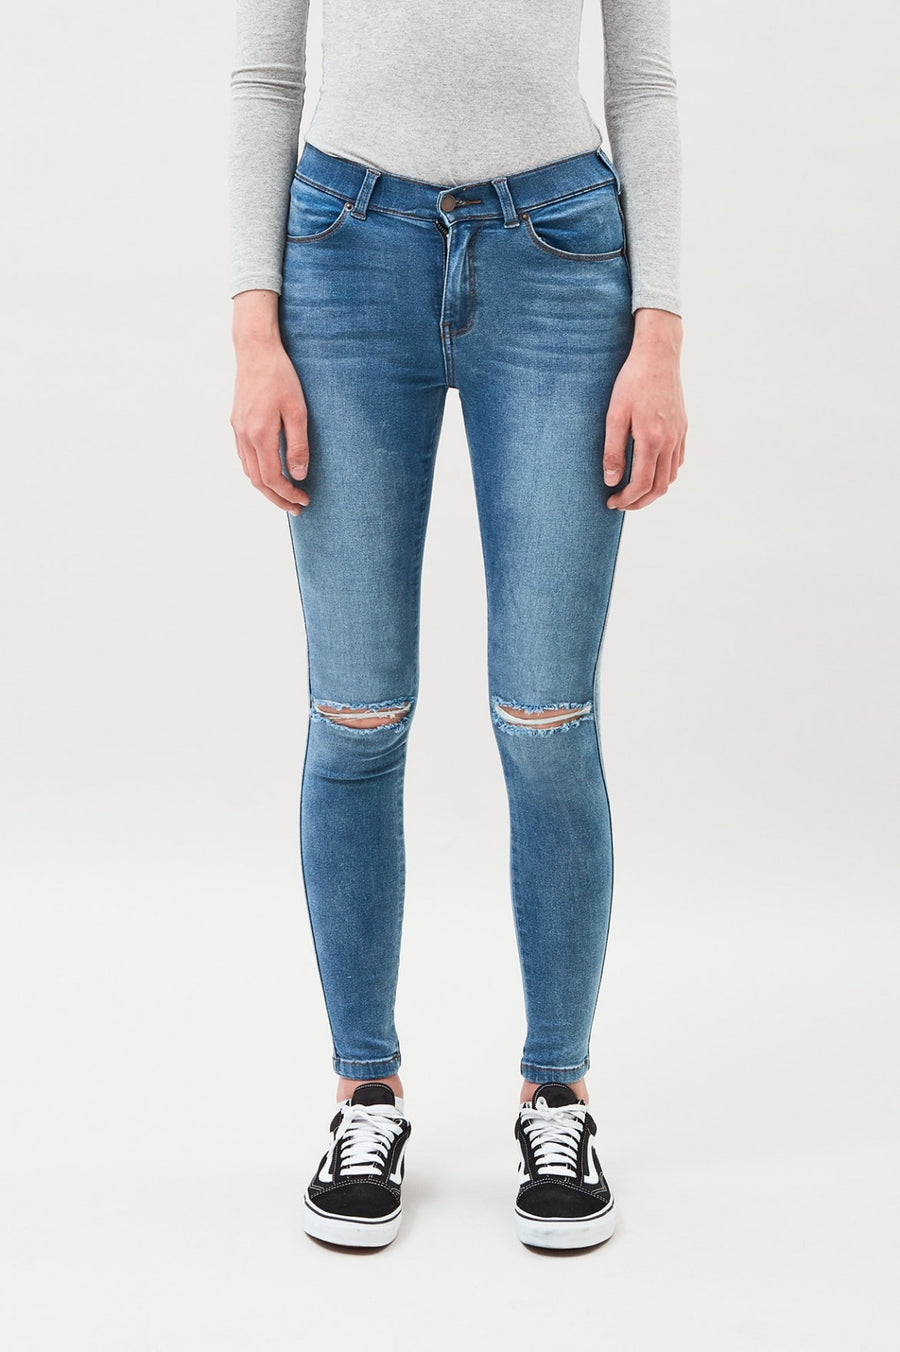 Lexy Jeans Light Stone Destroyed - Dr Denim Jeans - Australia & NZ